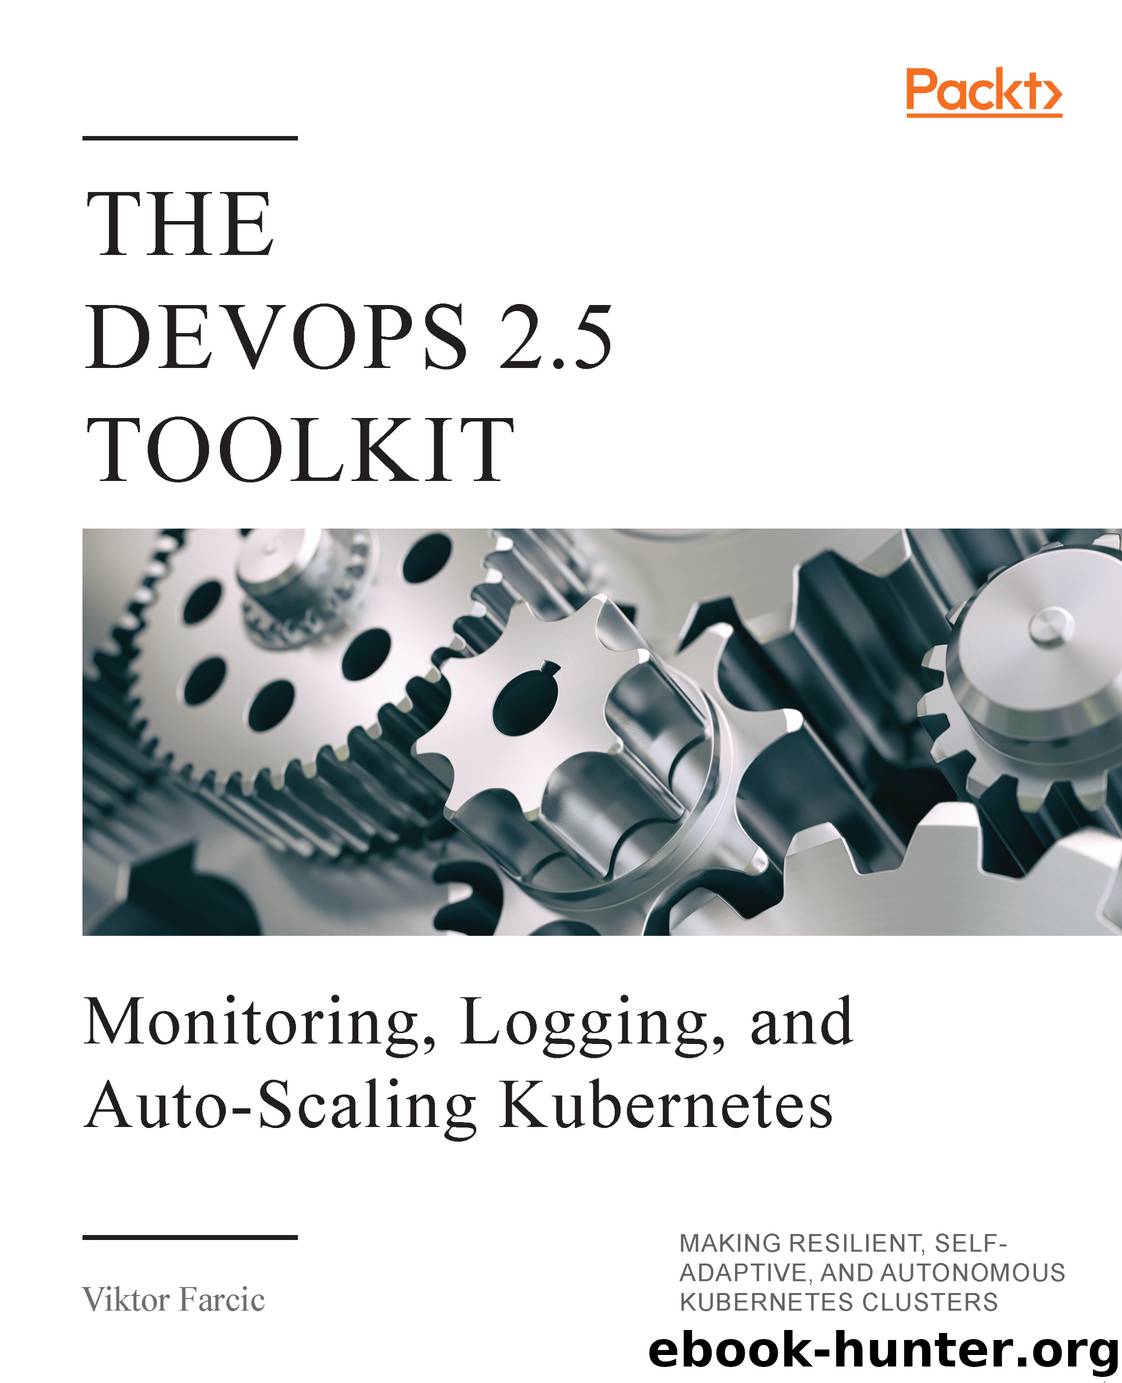 The DevOps 2.5 Toolkit by Viktor Farcic